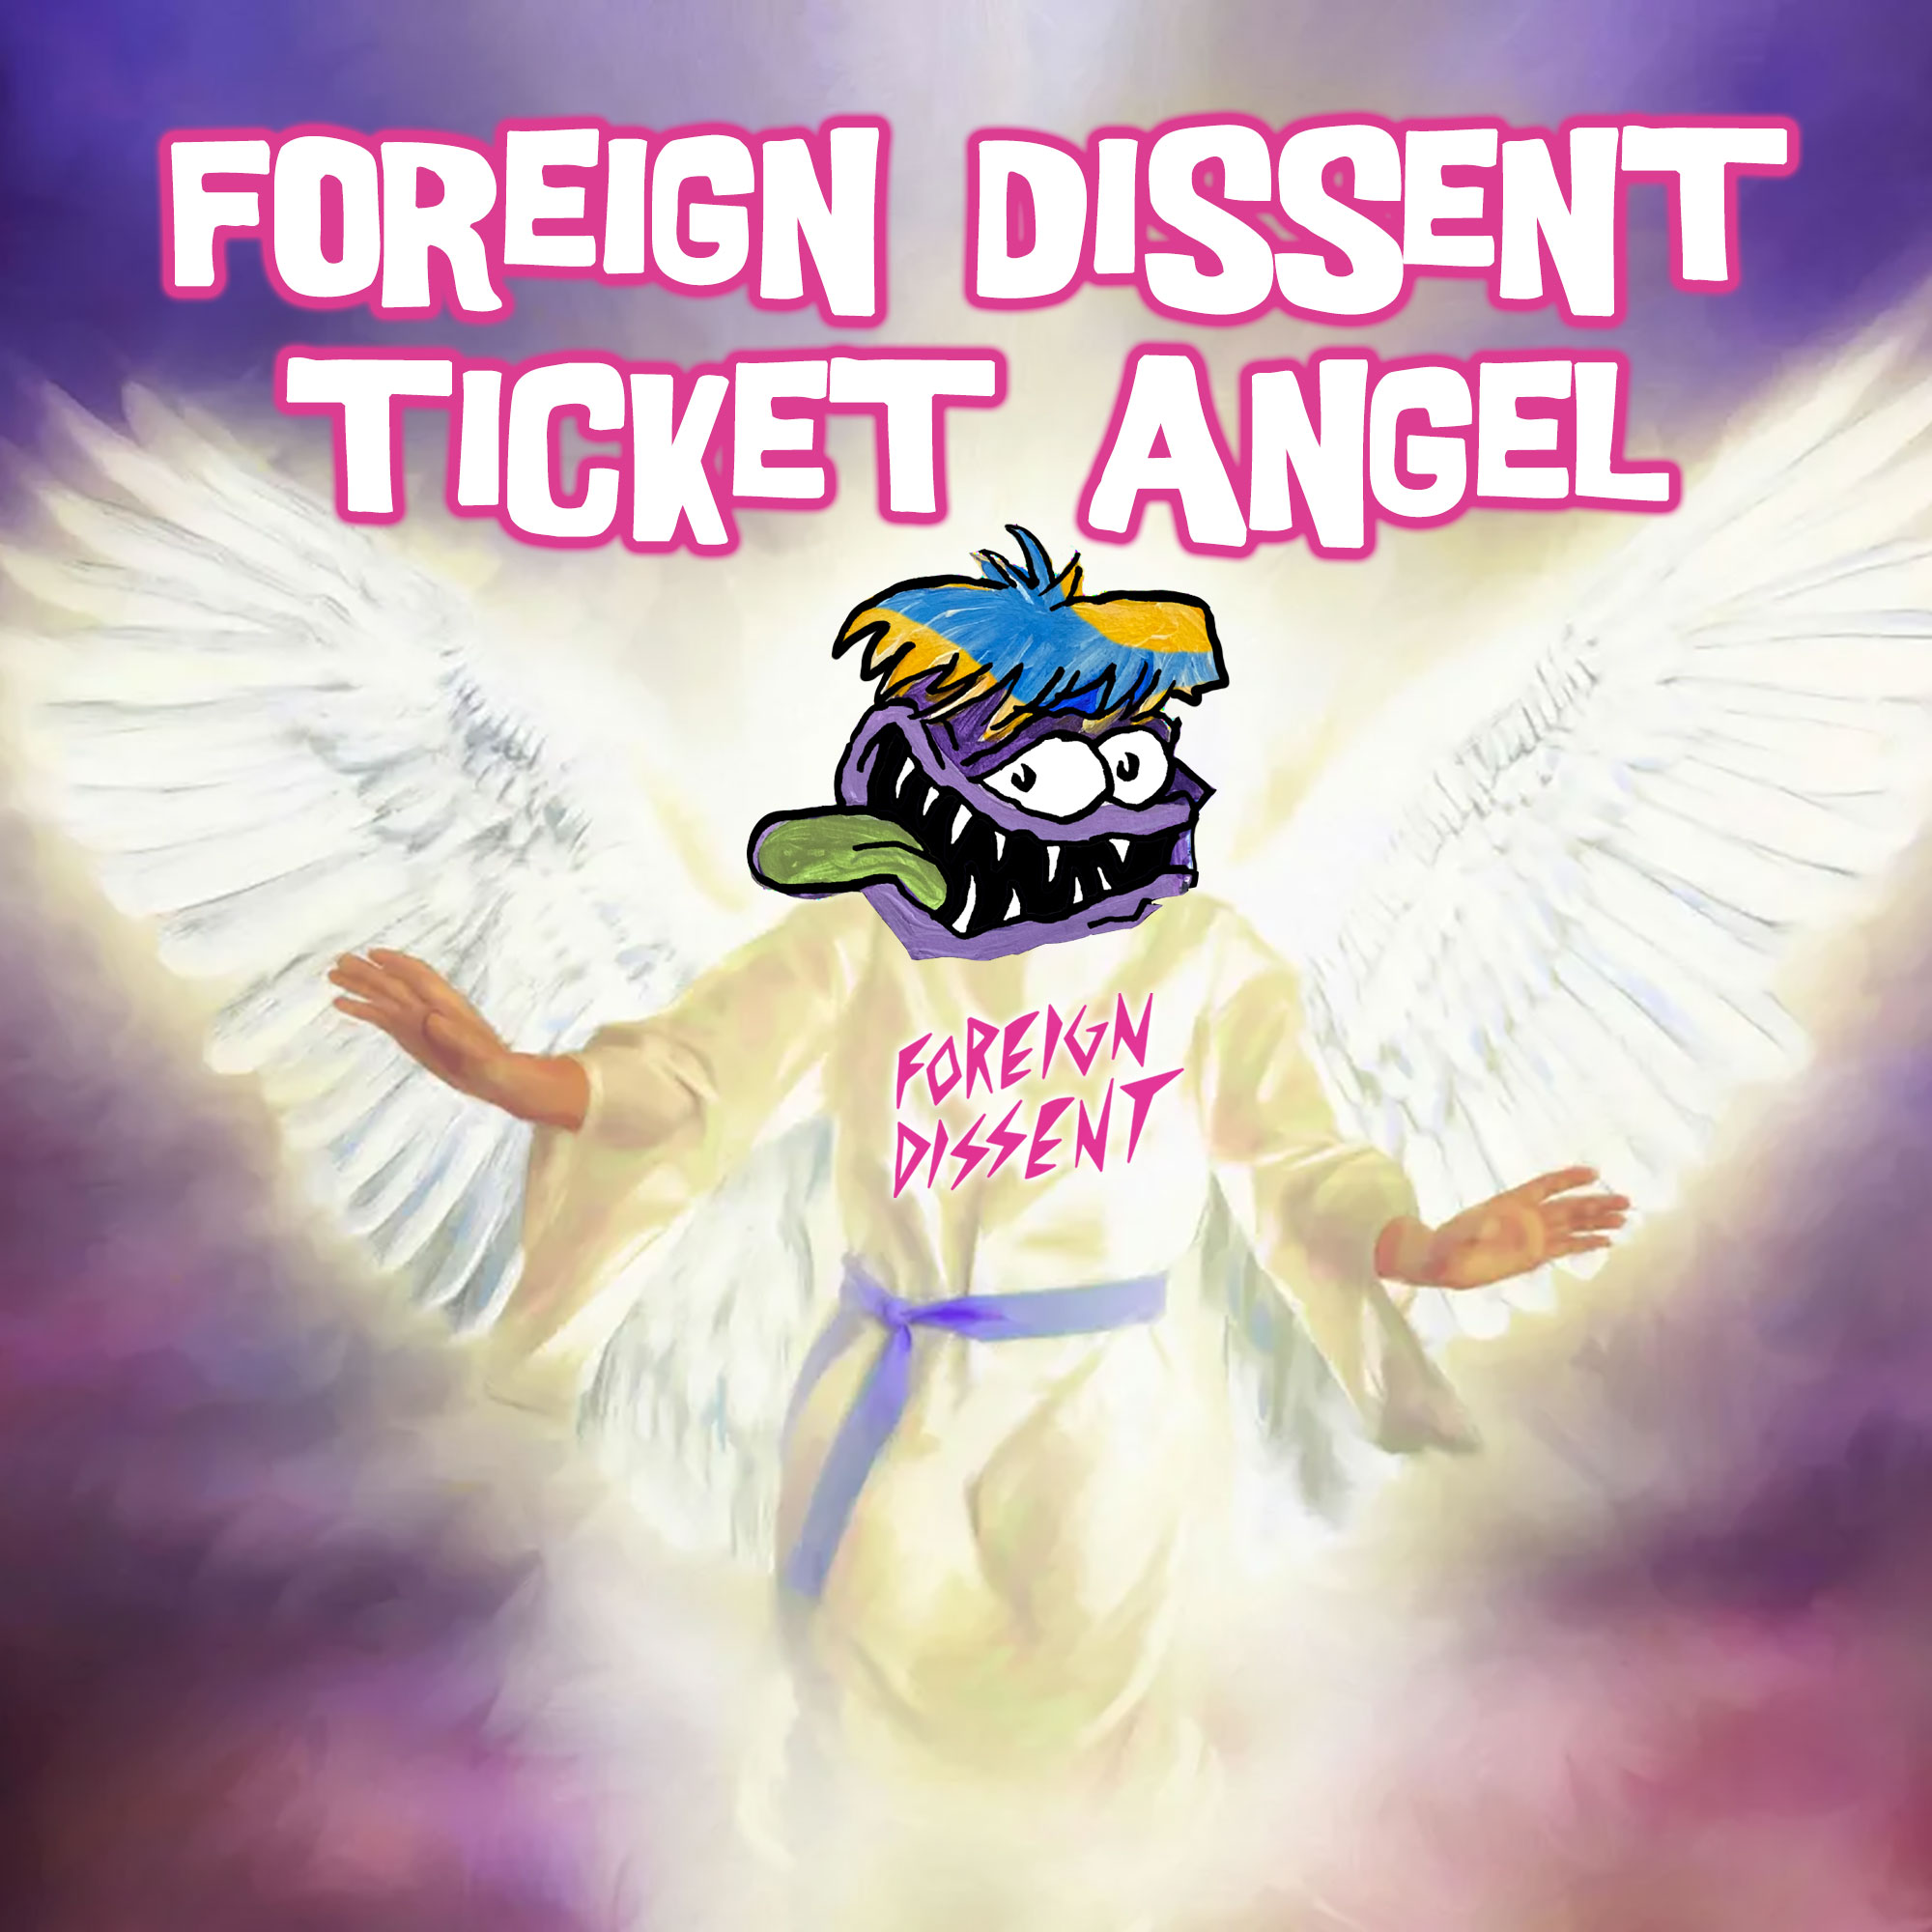 Foreign Dissent Ticket Angel